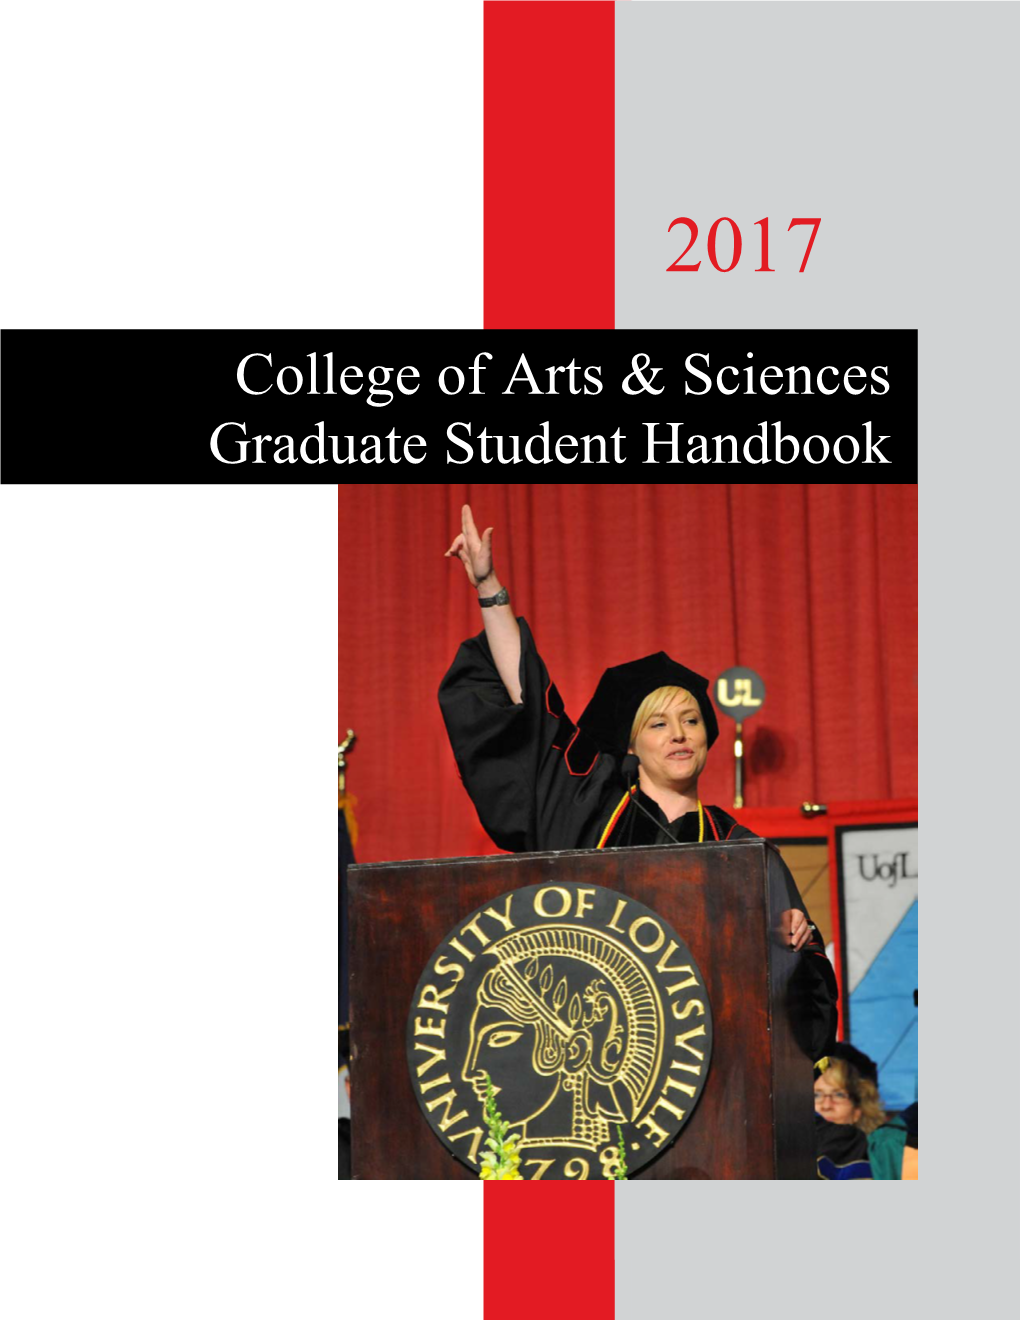 College of Arts & Sciences Graduate Student Handbook